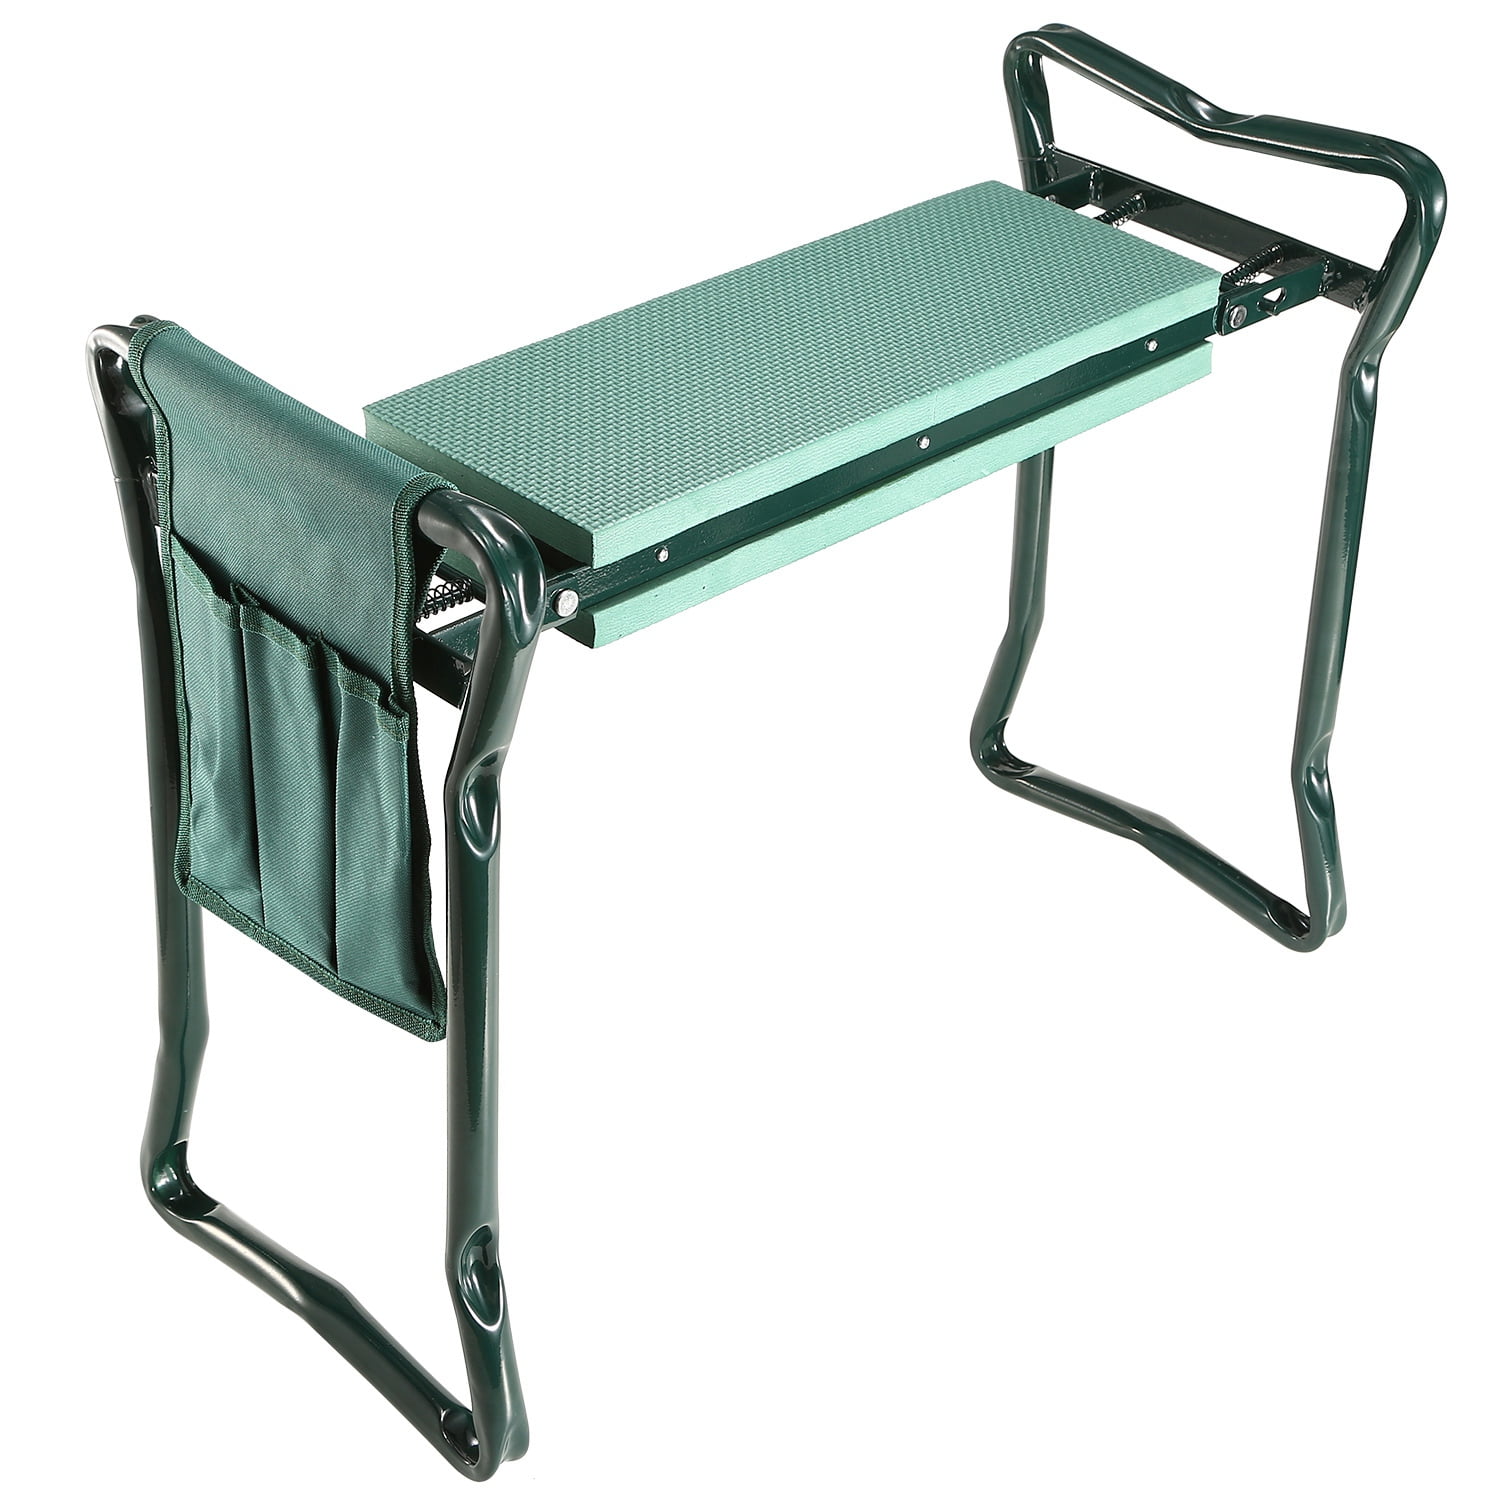 Le-Tech Portable Folding Garden Foam Padded stool & Kneeler Cushion for Gardening 